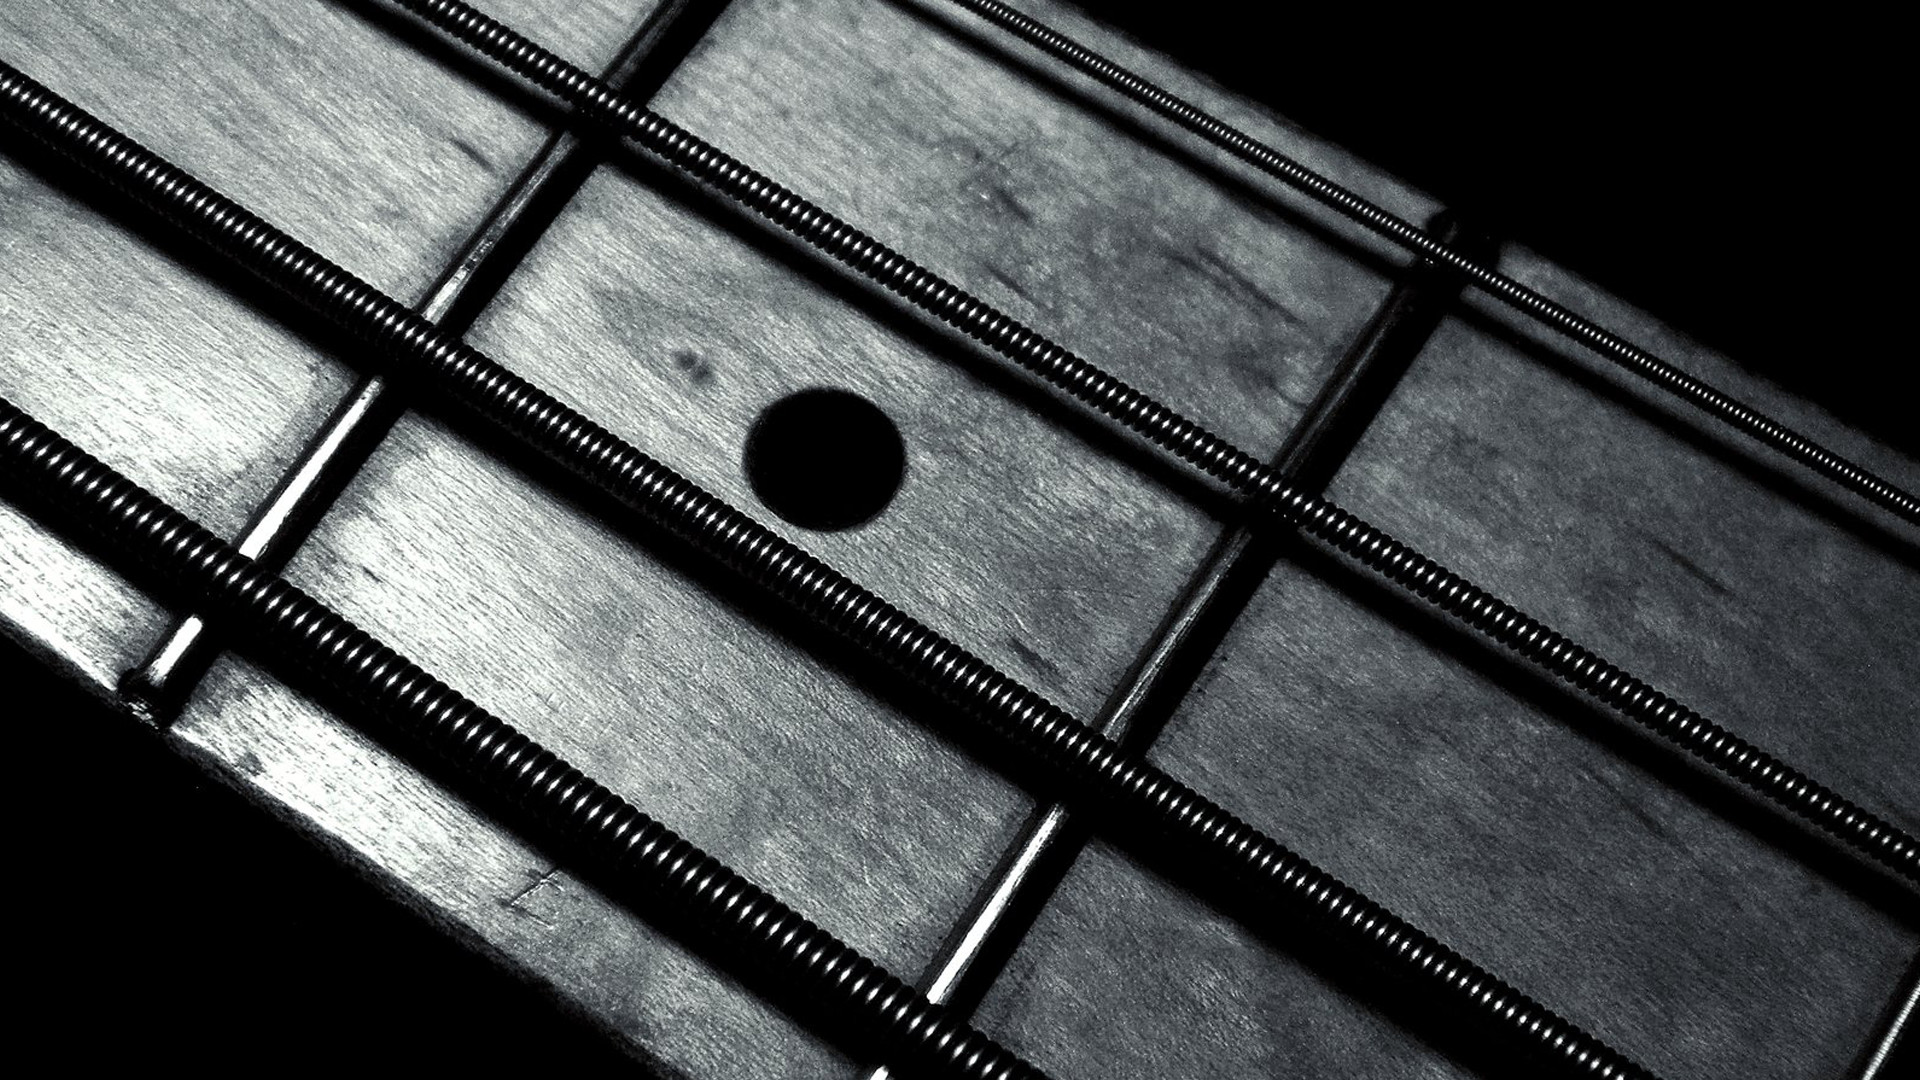 1920x1080 General  monochrome black background minimalism guitar bass guitars  closeup macro strings metal